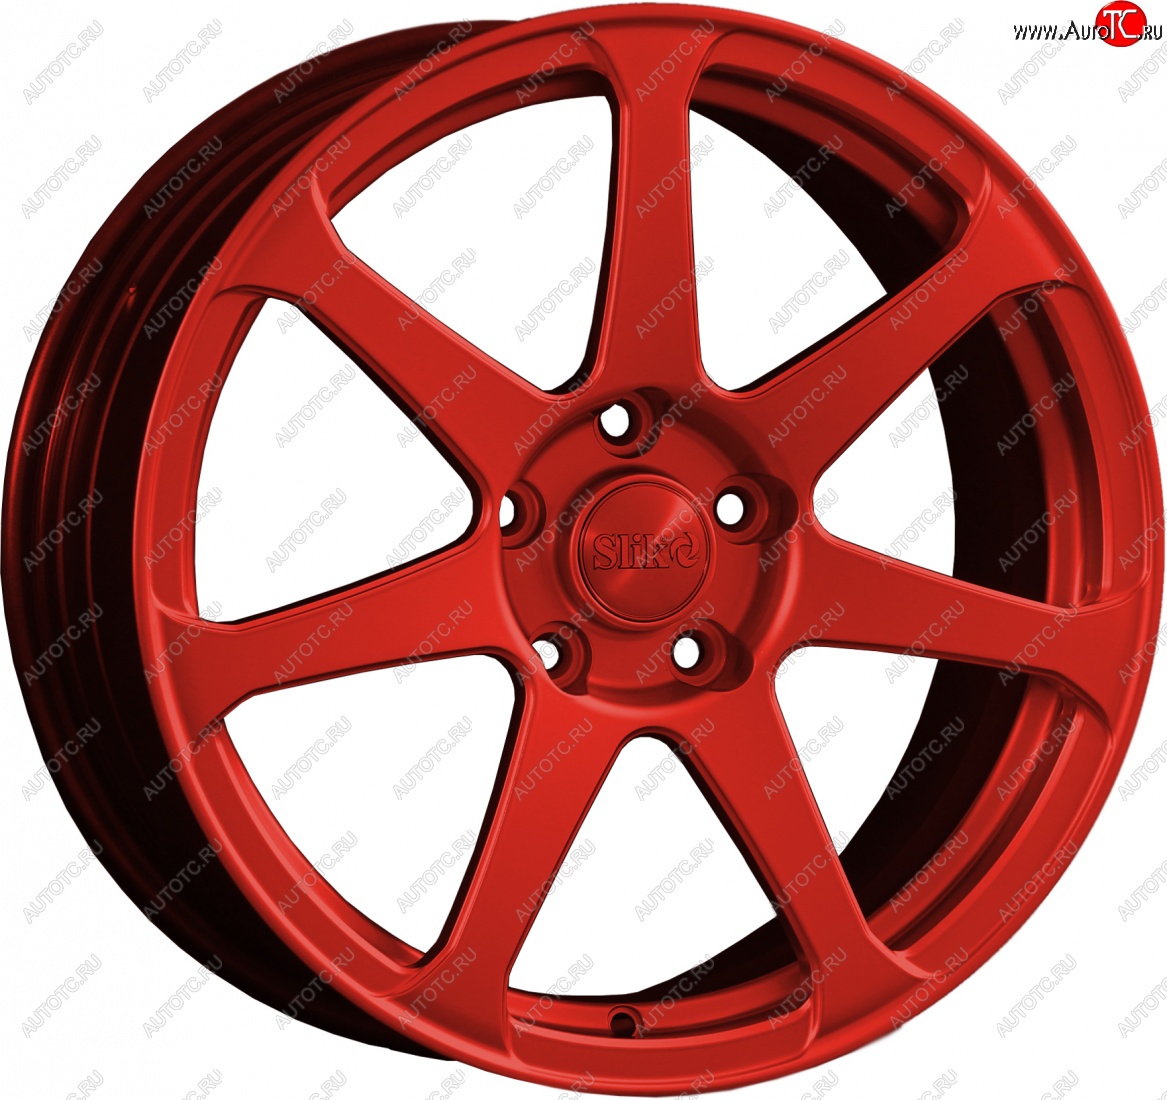 14 599 р. Кованый диск Slik classik R17x7.5 Красный (RED) 7.5x17 Toyota Allion T260 седан дорестайлинг (2007-2010) 5x100.0xDIA54.1xET45.0 (Цвет: RED)